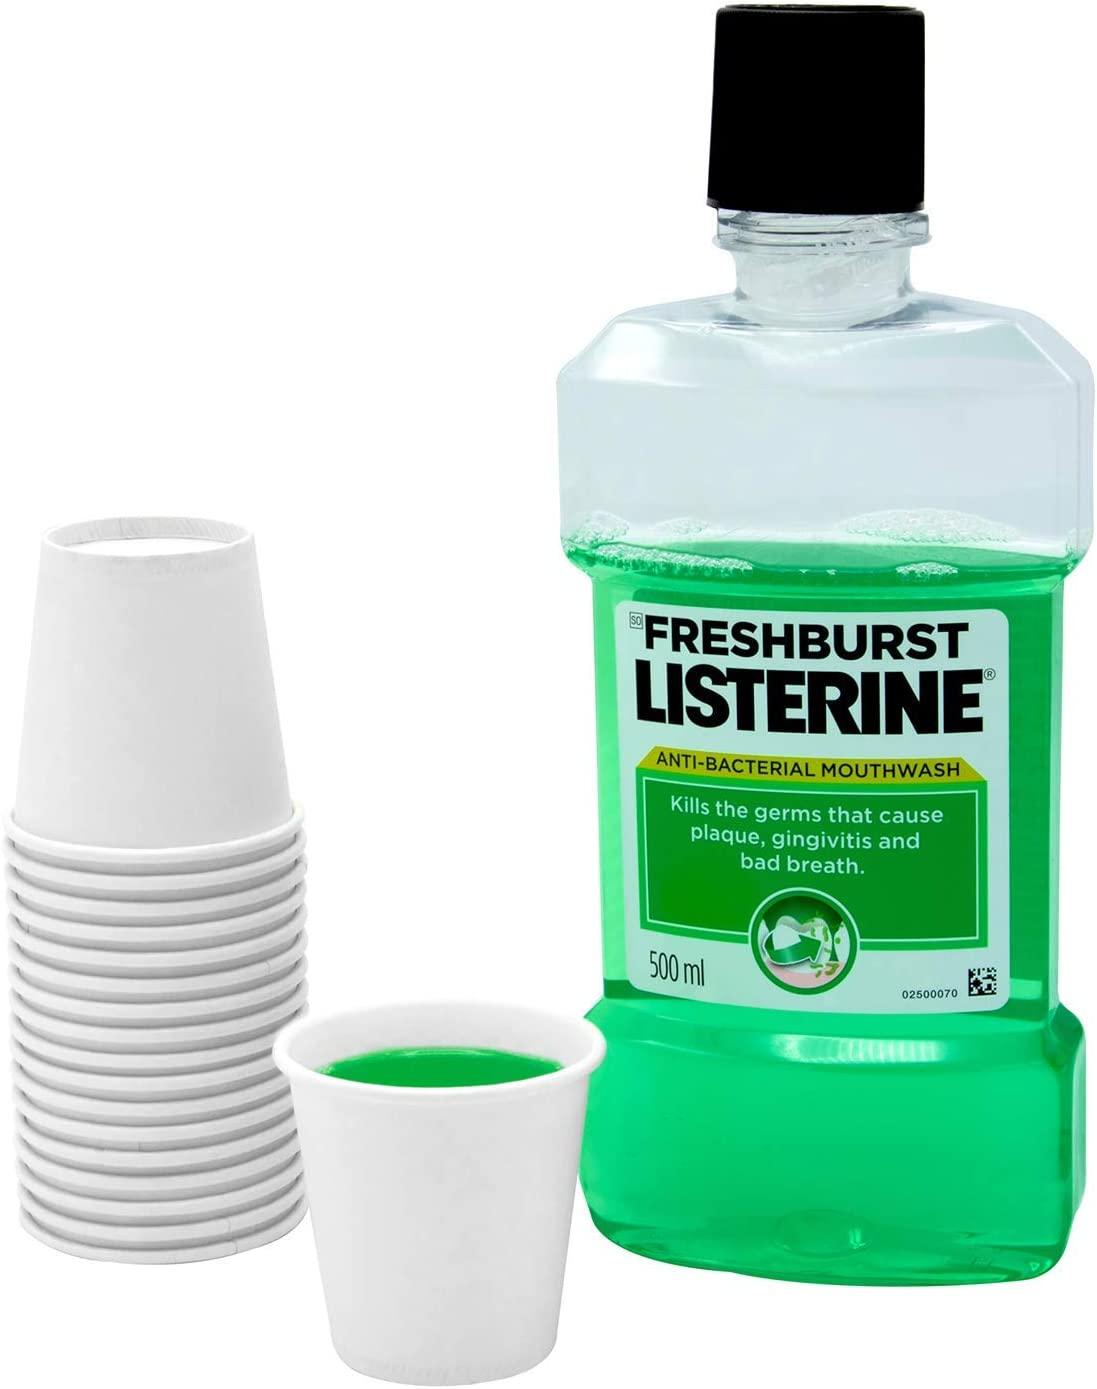 3 oz. Clear Plastic Cups, Small Disposable Bathroom, Espresso, Mouthwash  Polypropylene Cups